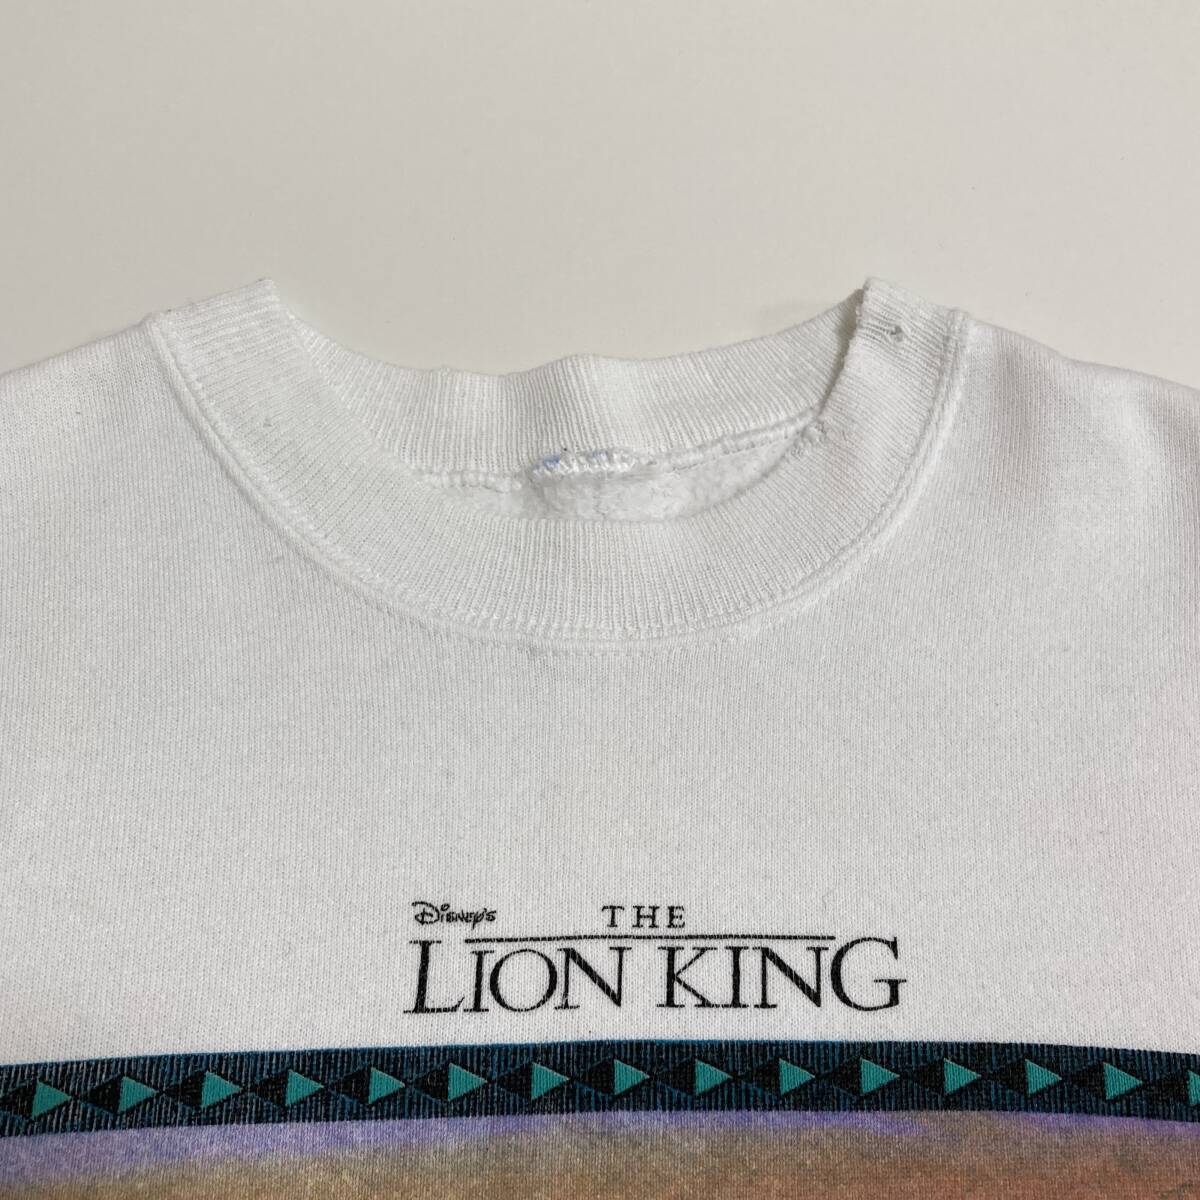 90s Disney THE LION KING スウェット ホワイト 白 ライオンキング ディズニー 映画 トレーナー 古着 オールド ビンテージ 3120215_画像3